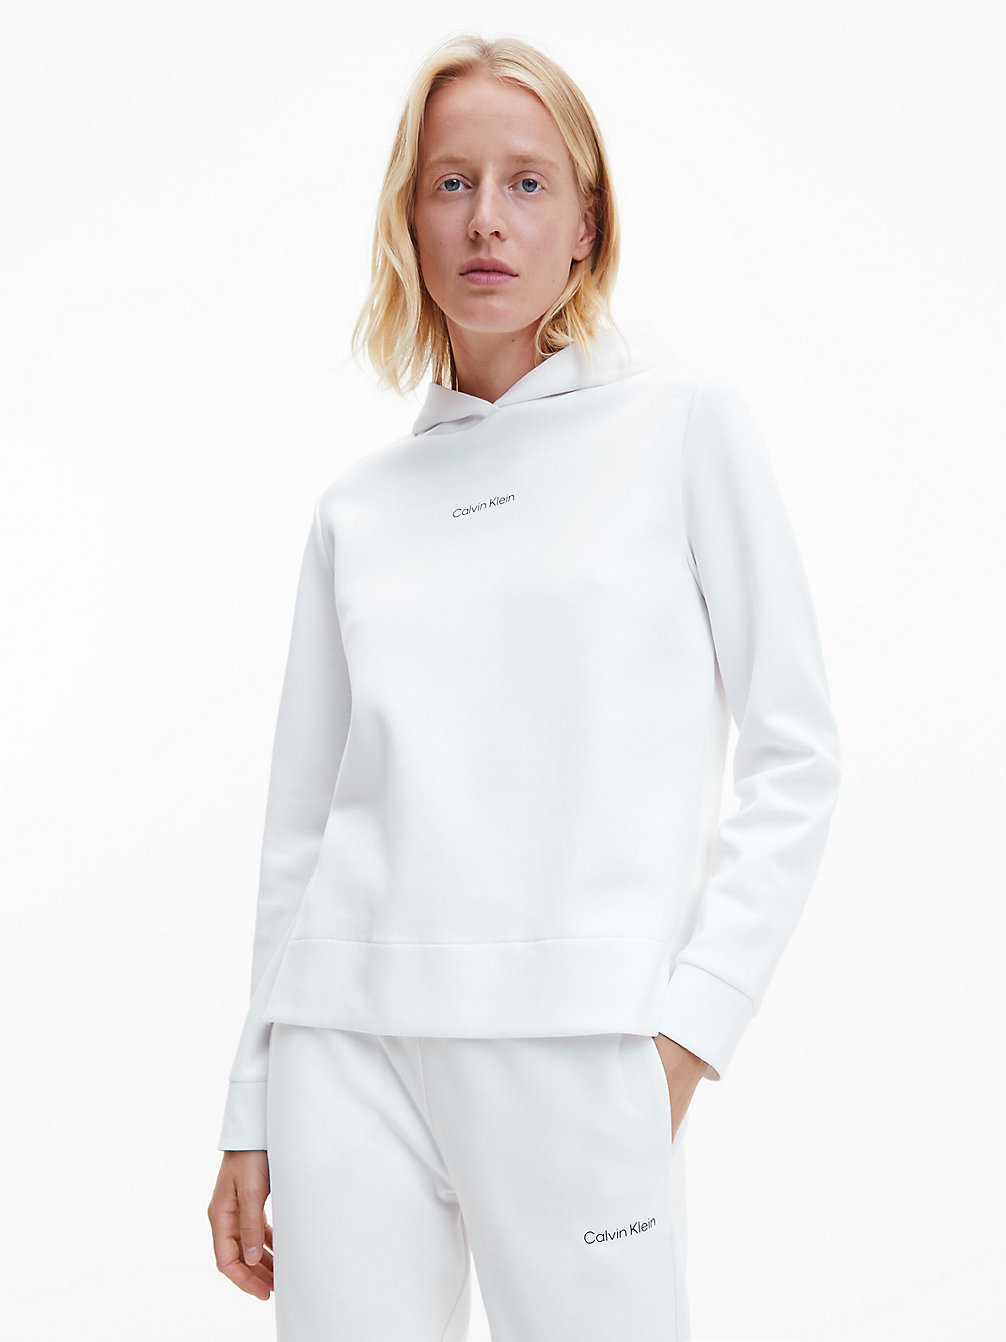 BRIGHT WHITE > Bluza Z Kapturem Z Przetworzonego Poliestru > undefined Kobiety - Calvin Klein